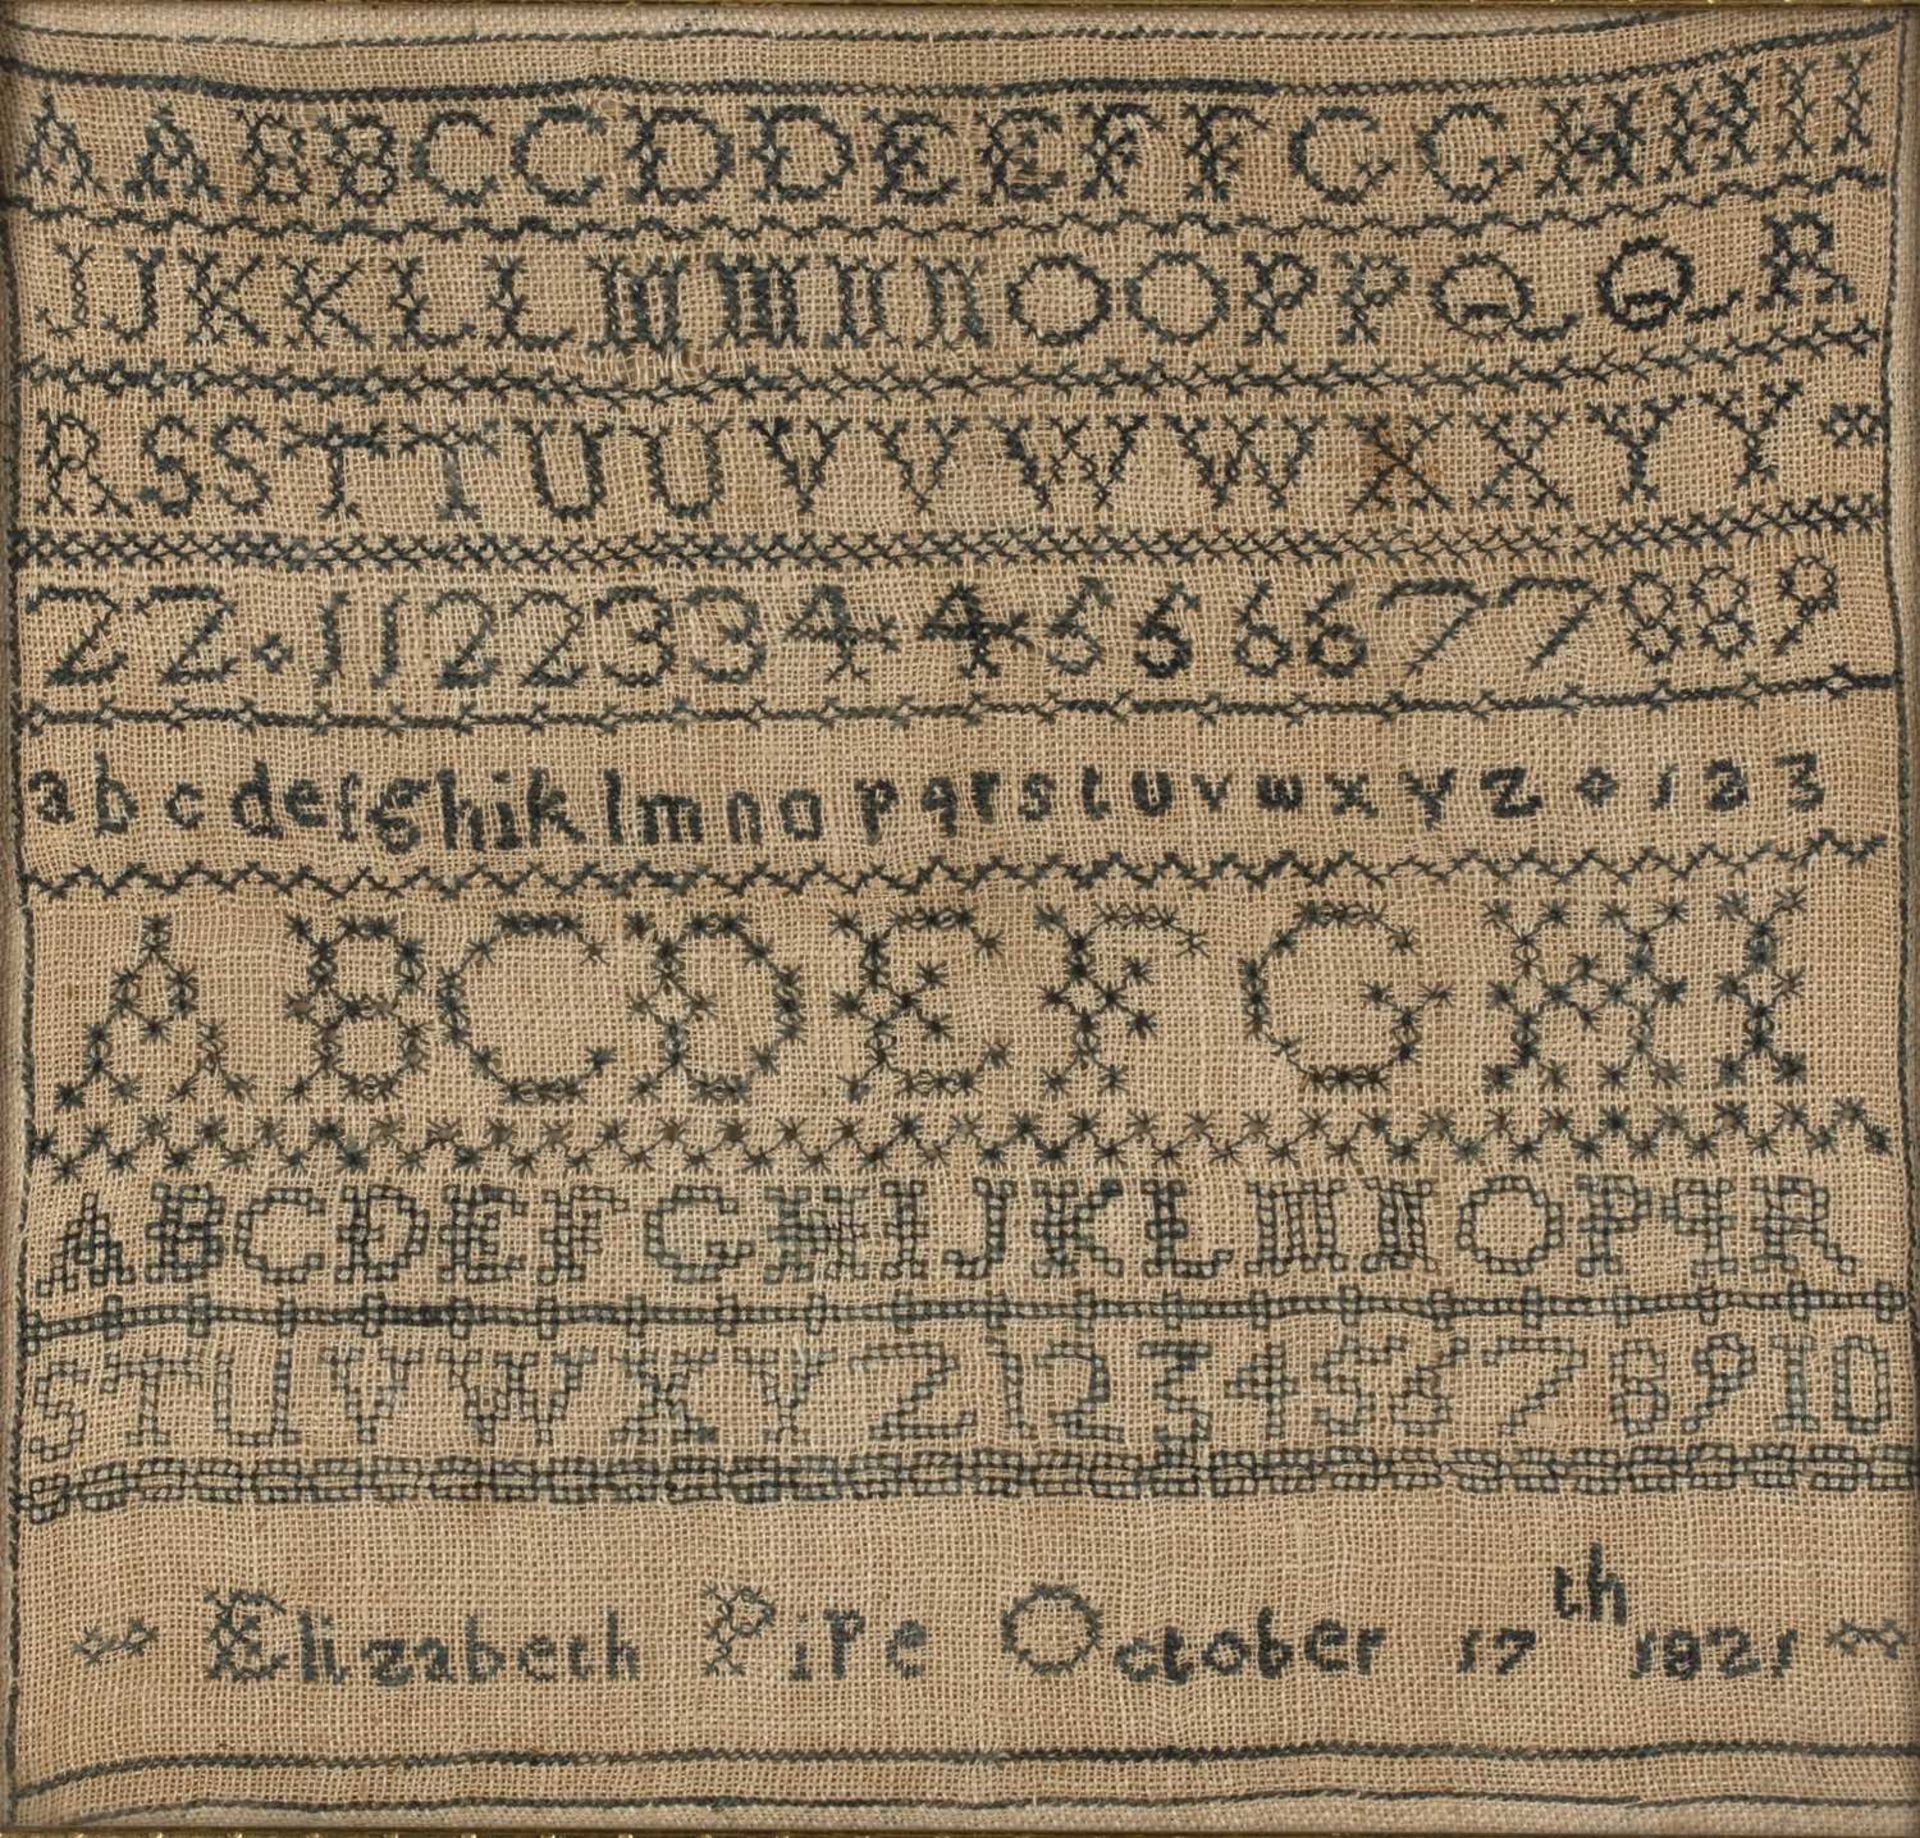 Two antique needlework samplers the larger monochrome alphabet sampler reads 'Elizabeth Pipe,